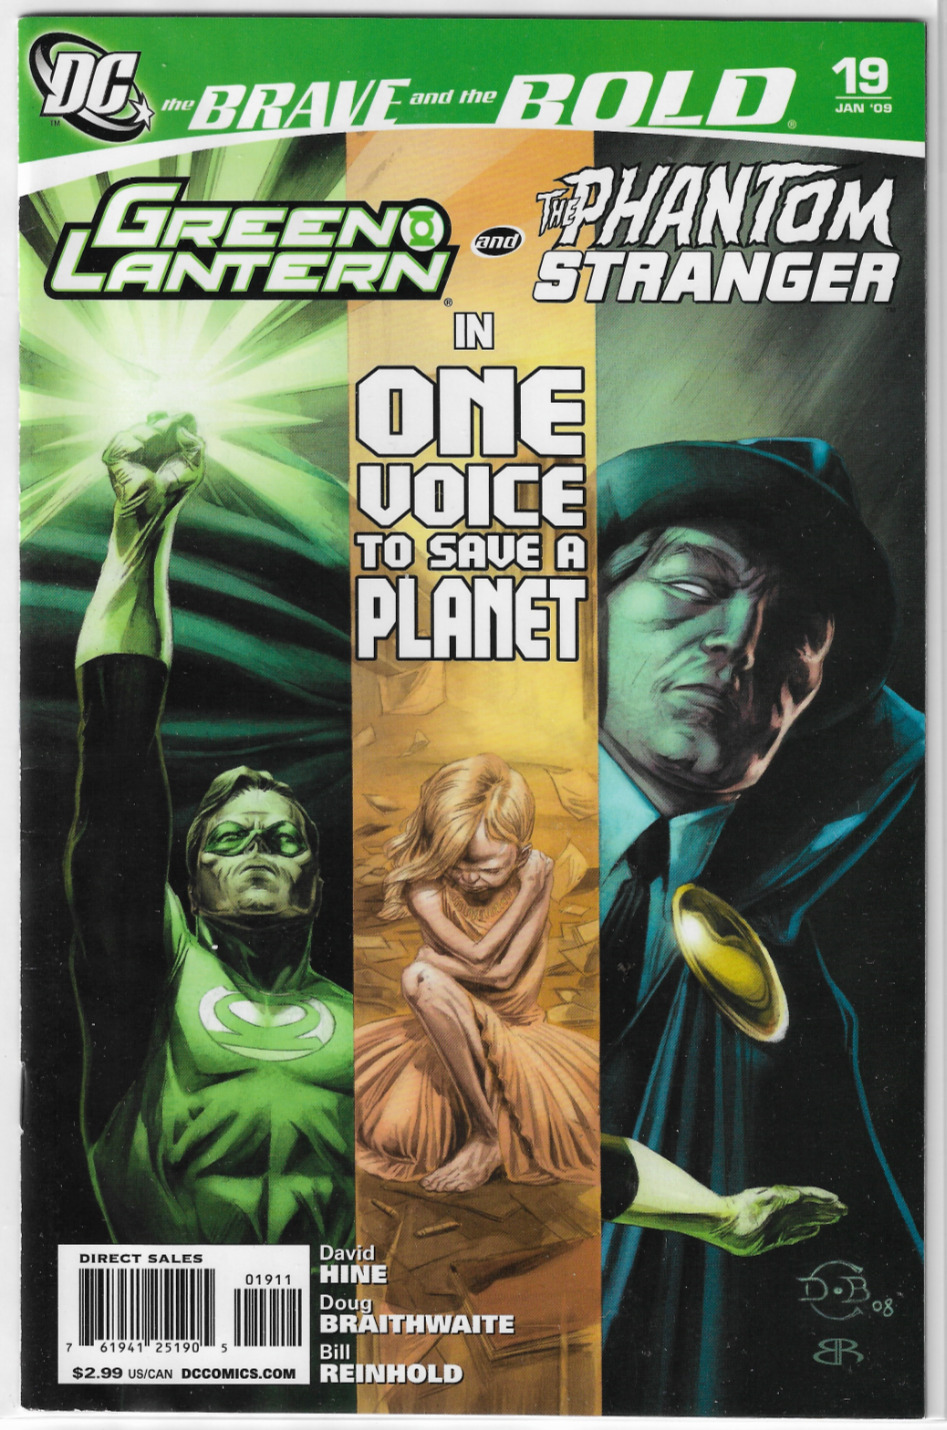 The Brave & The Bold (2008) #19 Green Lantern Phantom Stranger DC Comics